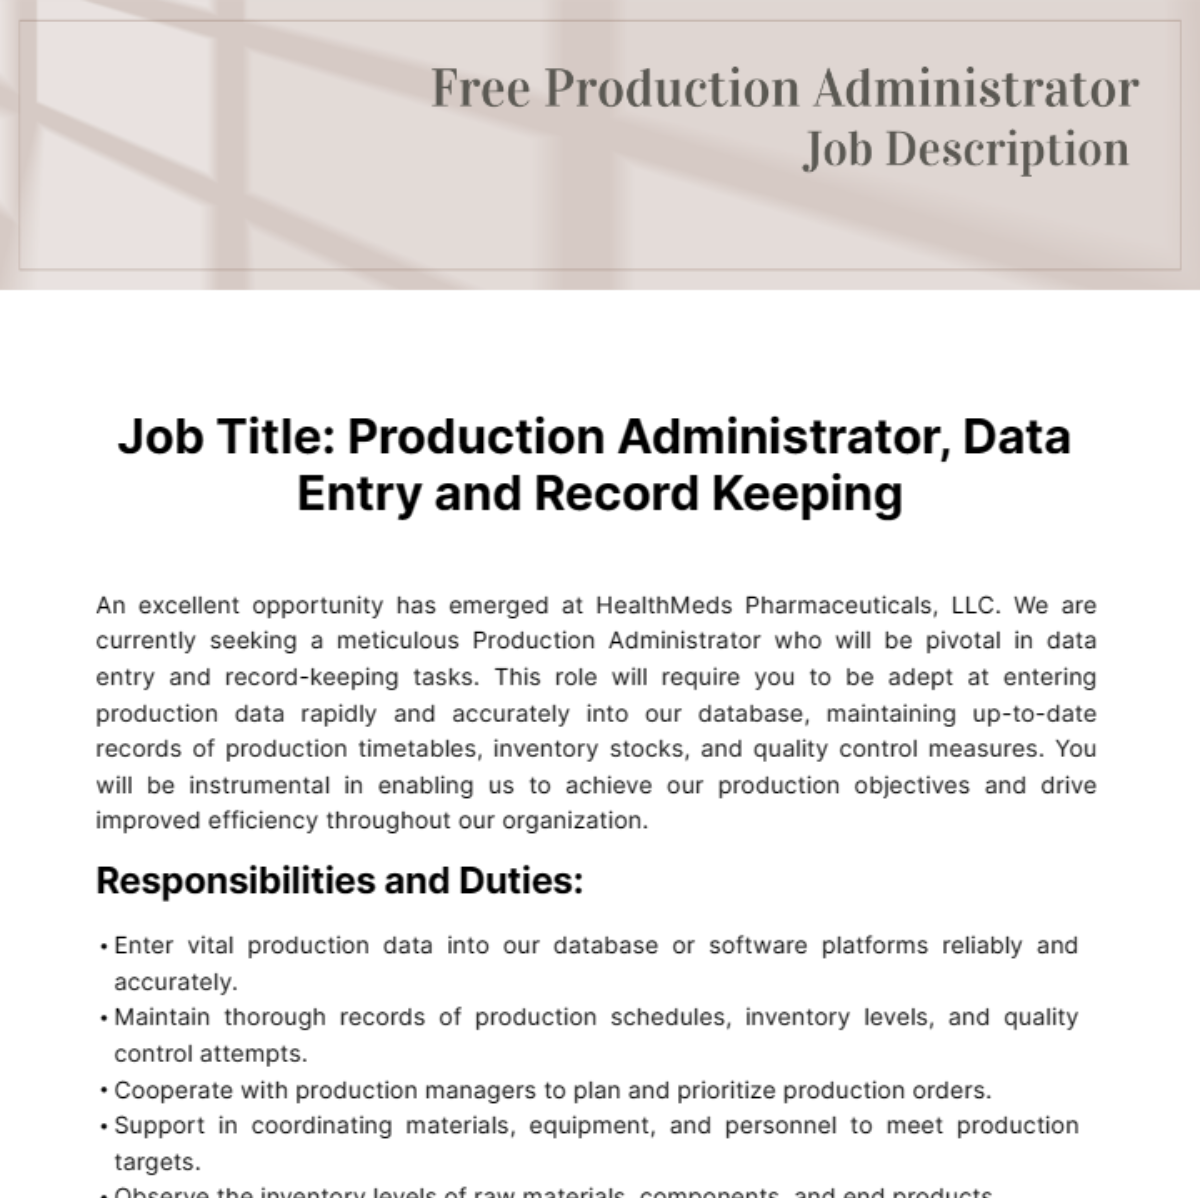 Free Production Administrator Job Description Template